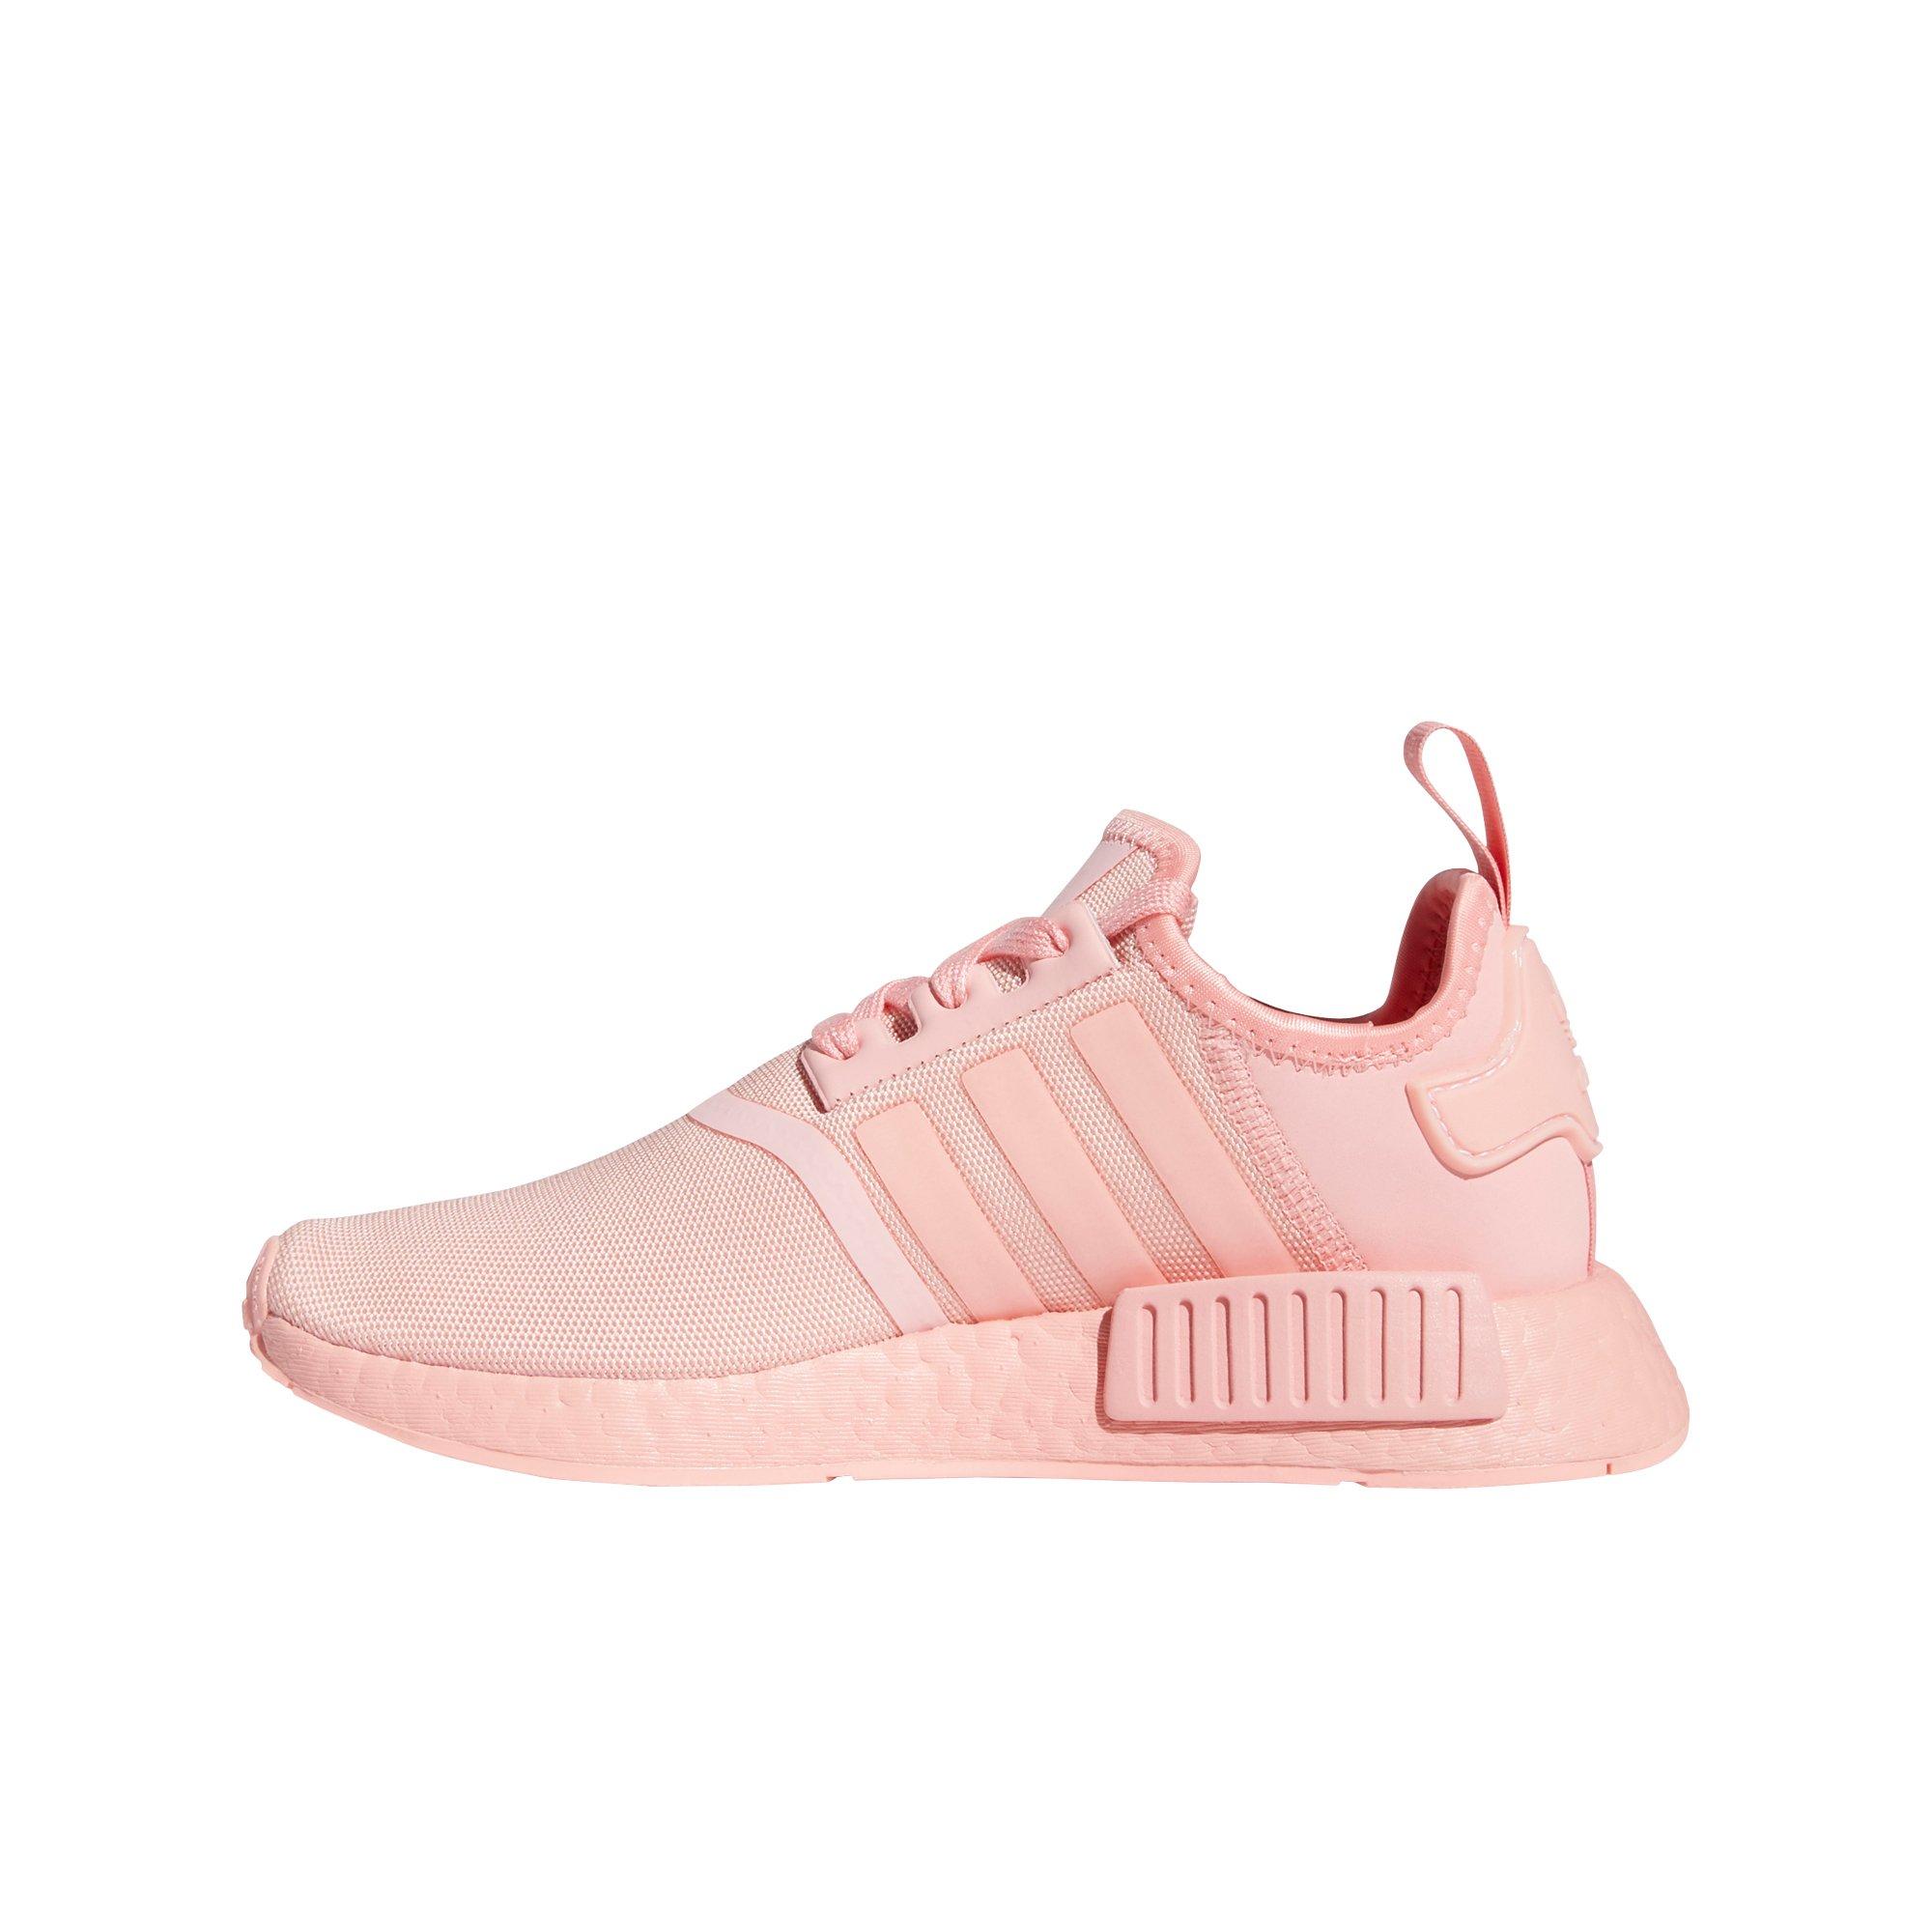 glory pink adidas shoes